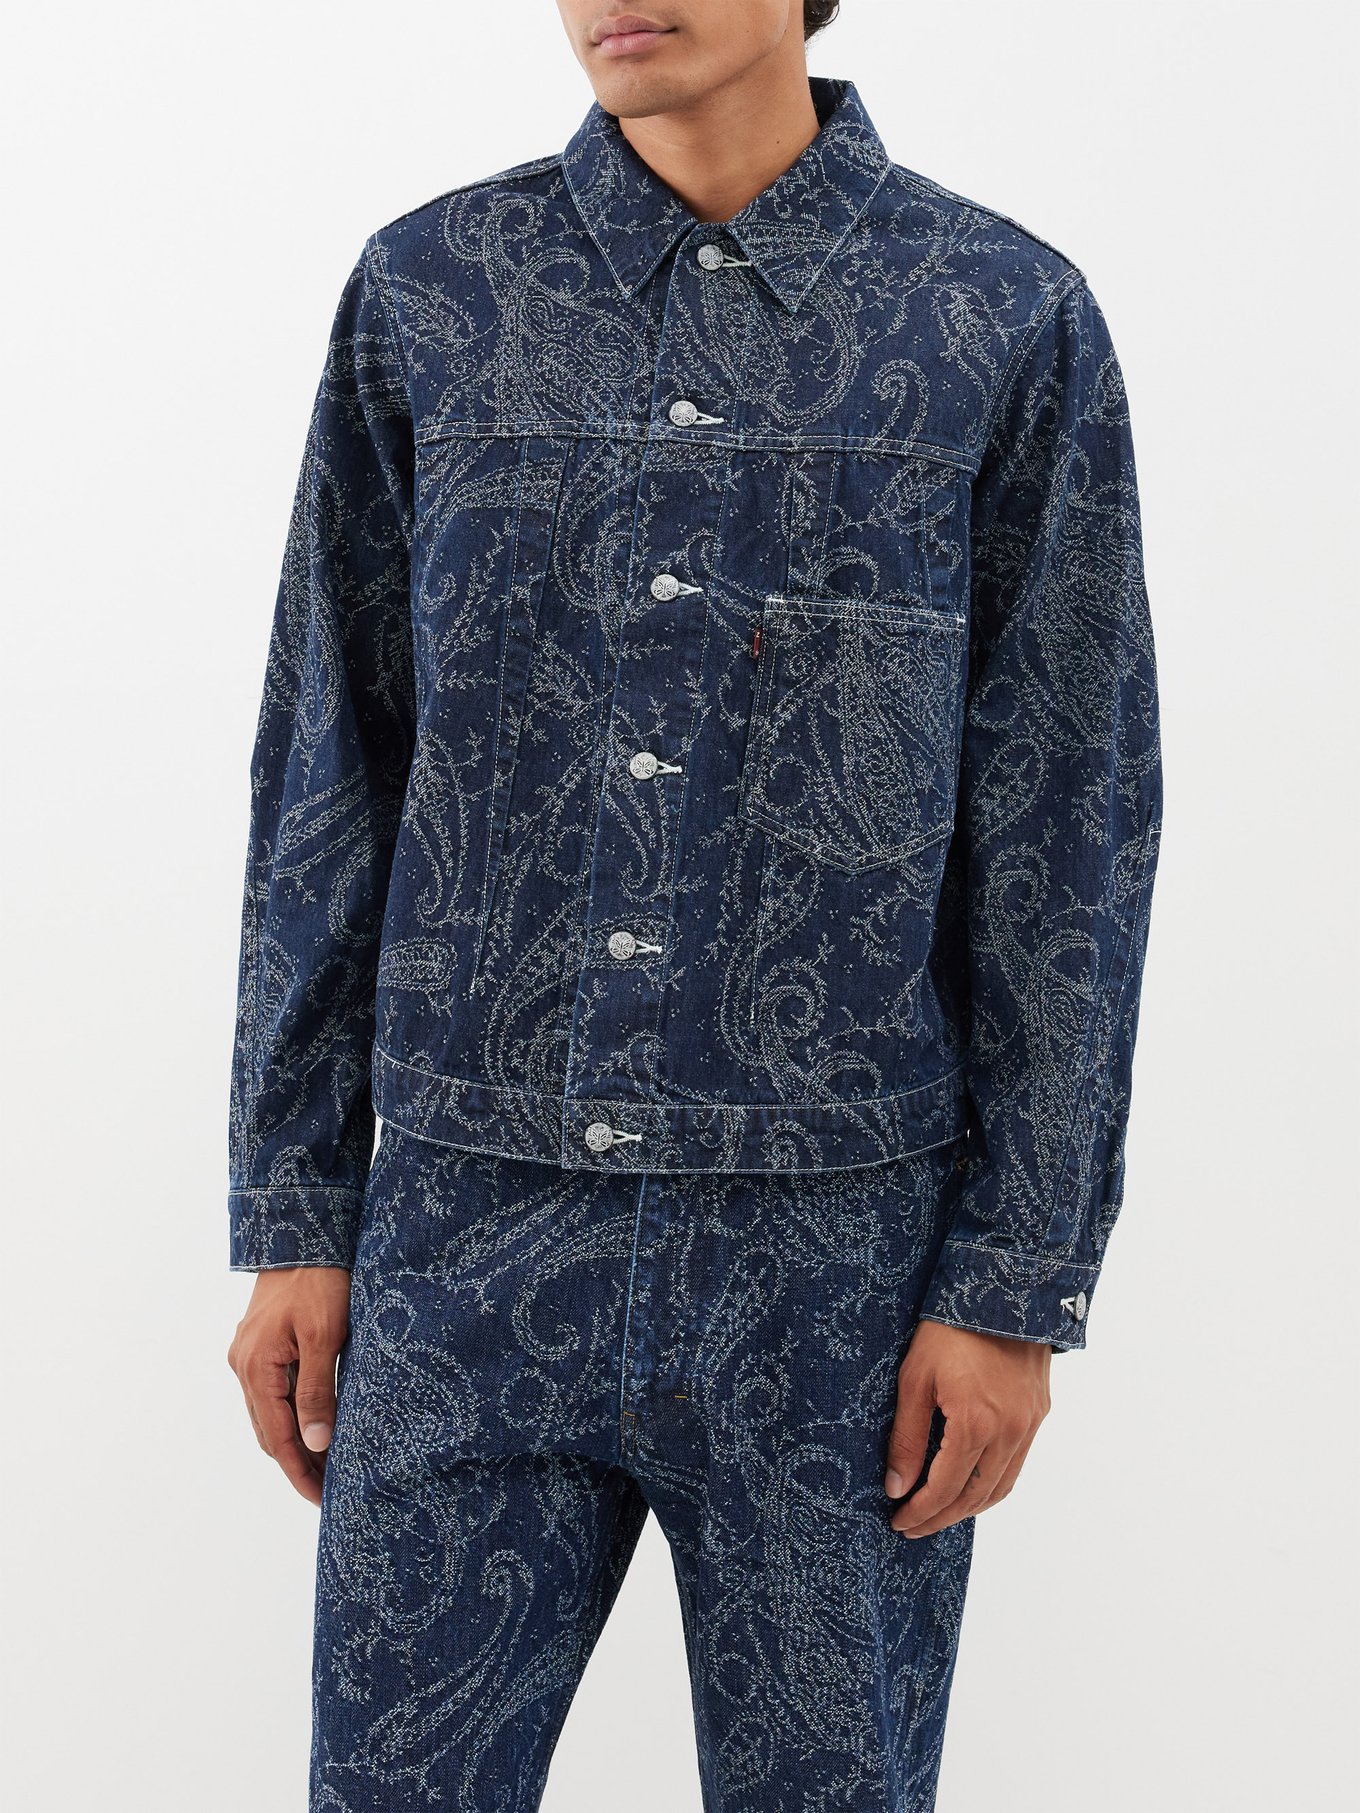 AMIRI, Jacquard Print Denim Workwear Jacket, Women